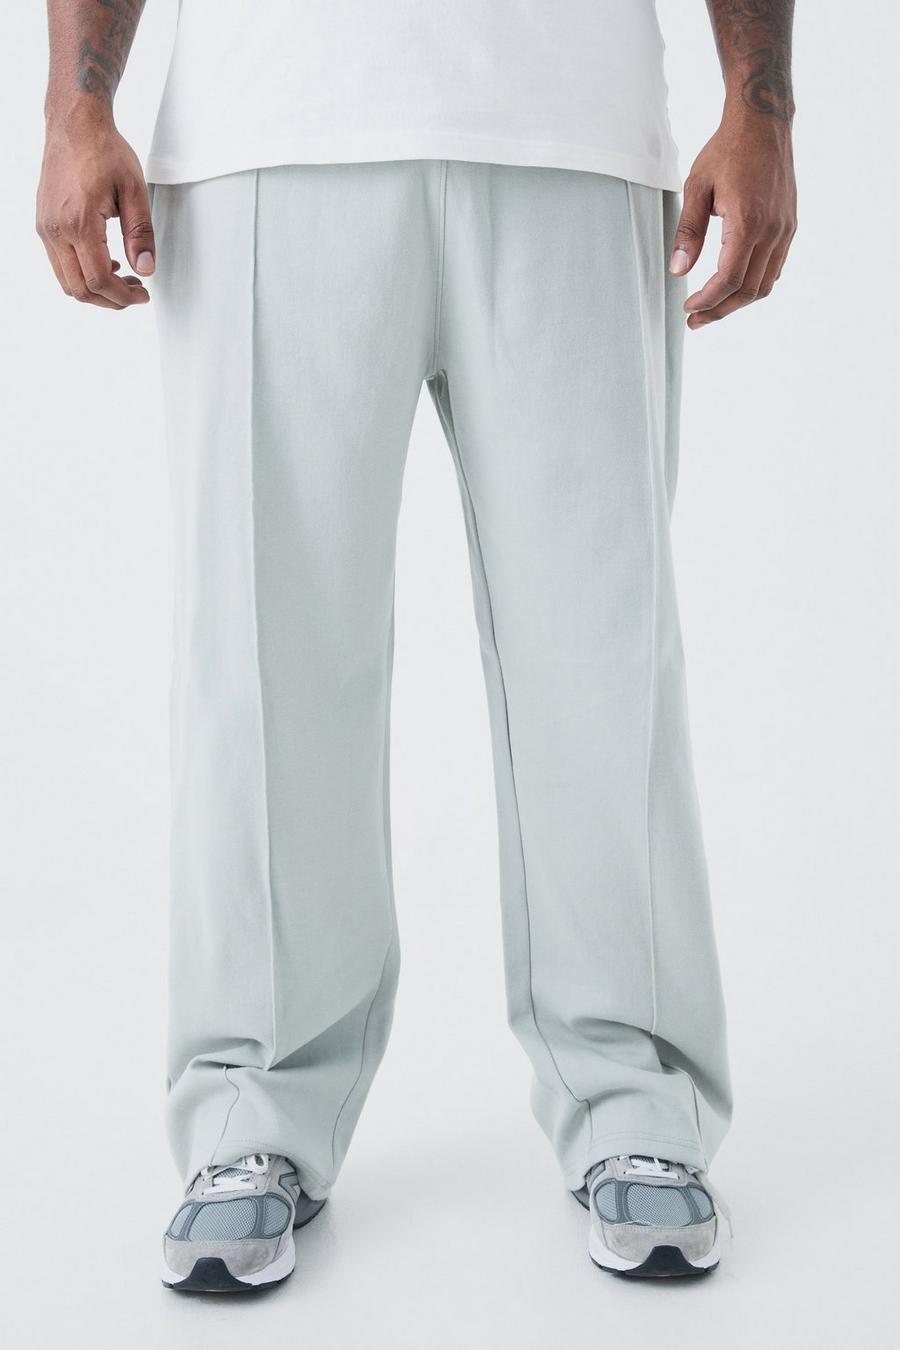 Pantaloni tuta Plus Size rilassati con nervature e nervature, Light grey